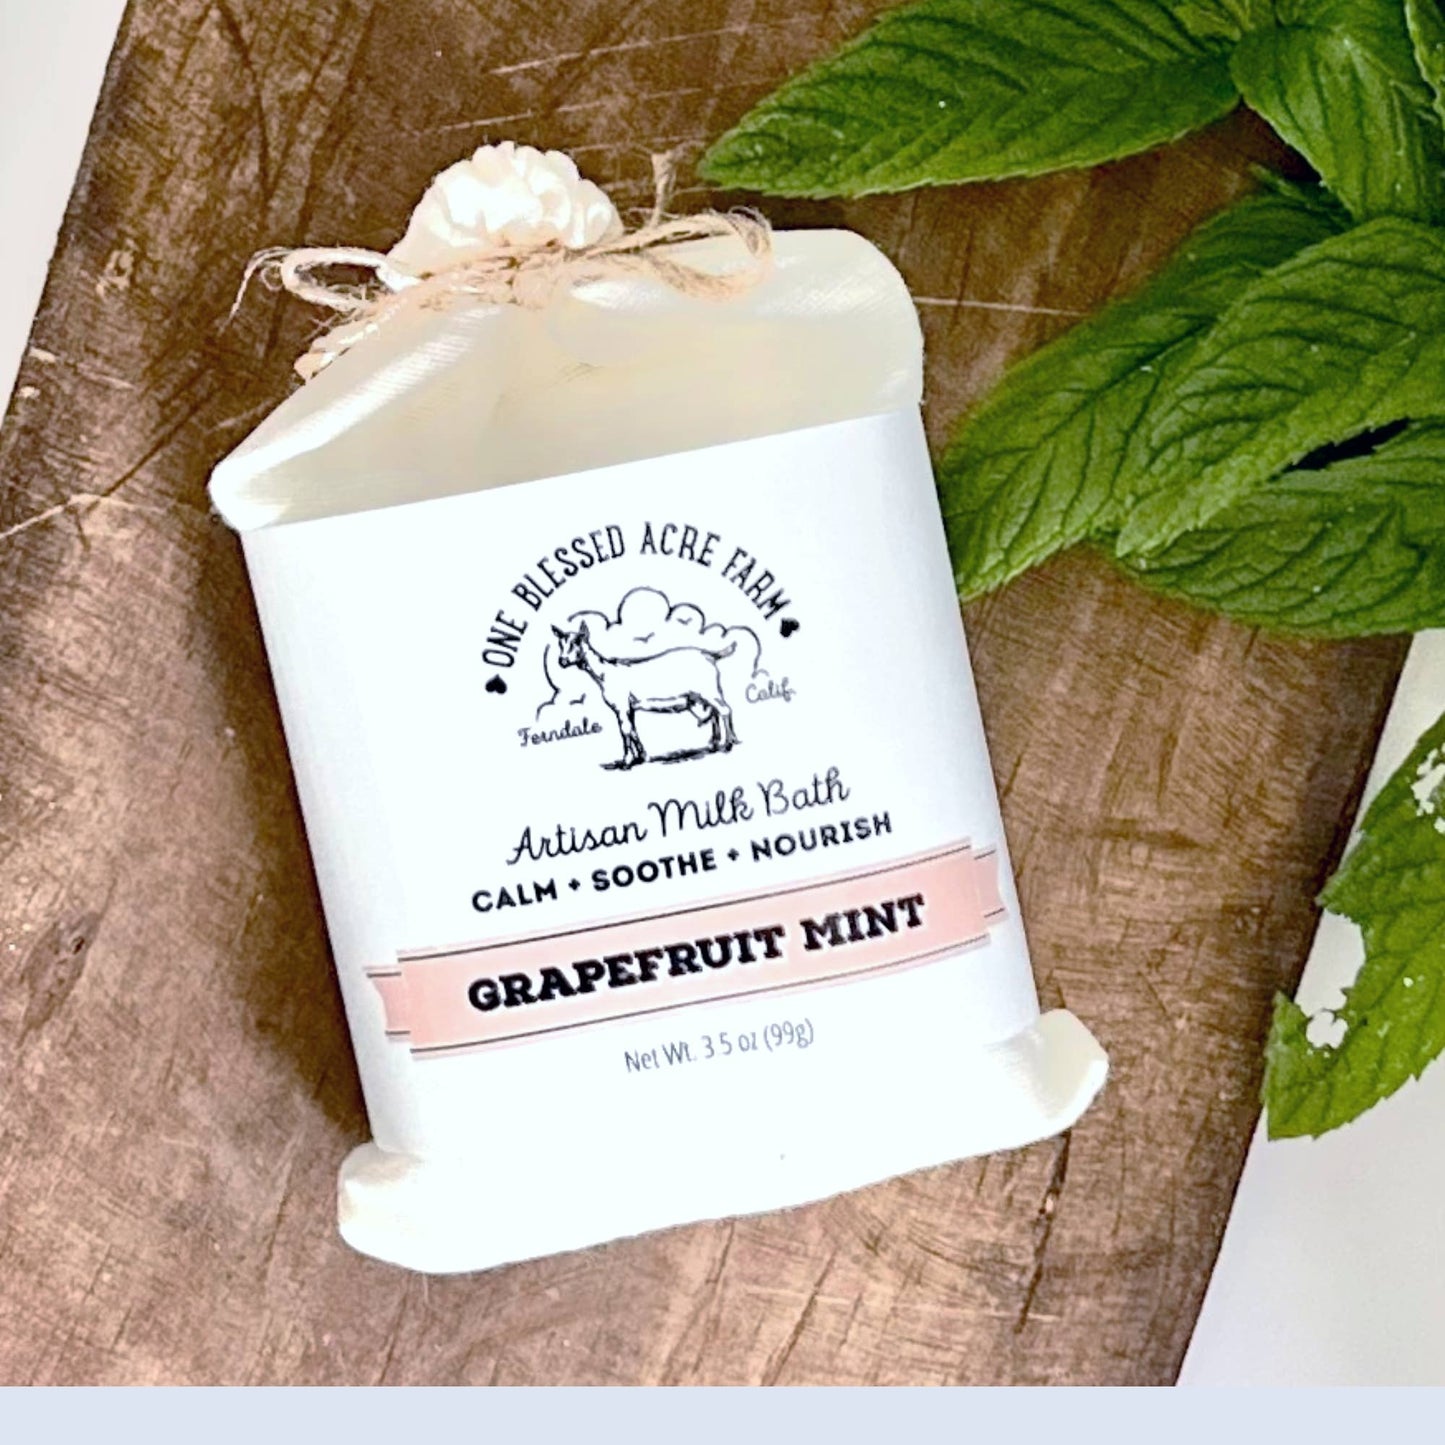 Grapefruit Mint Goat Milk Tub Tea, Artisan Milk Bath: Grapefruit Mint